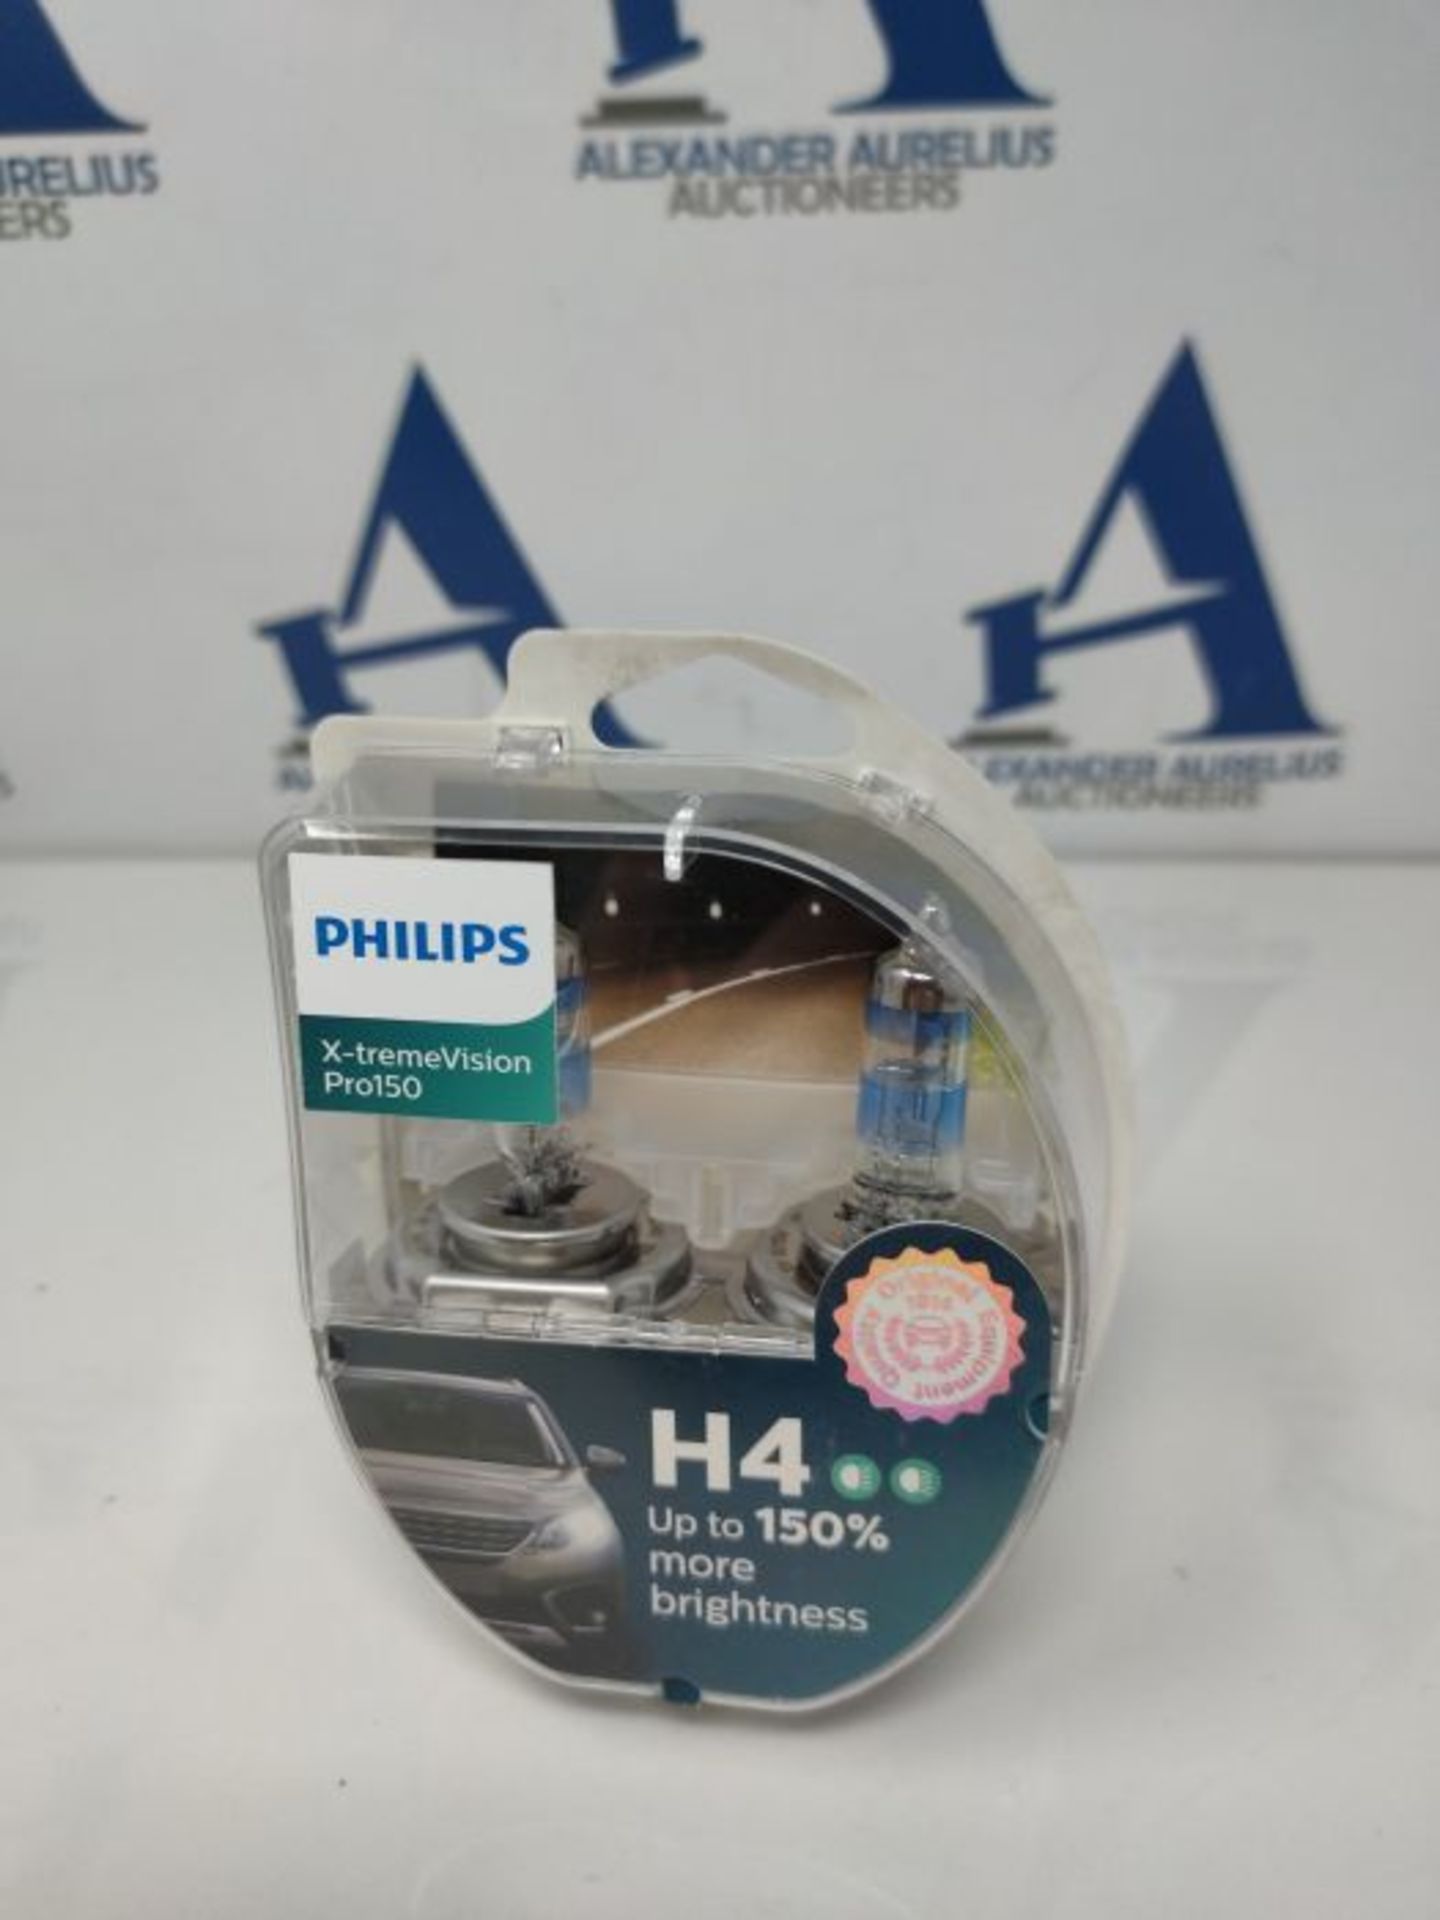 Philips X-tremeVision Pro150 H4 car headlight bulb +150%, set of 2 - Image 2 of 3